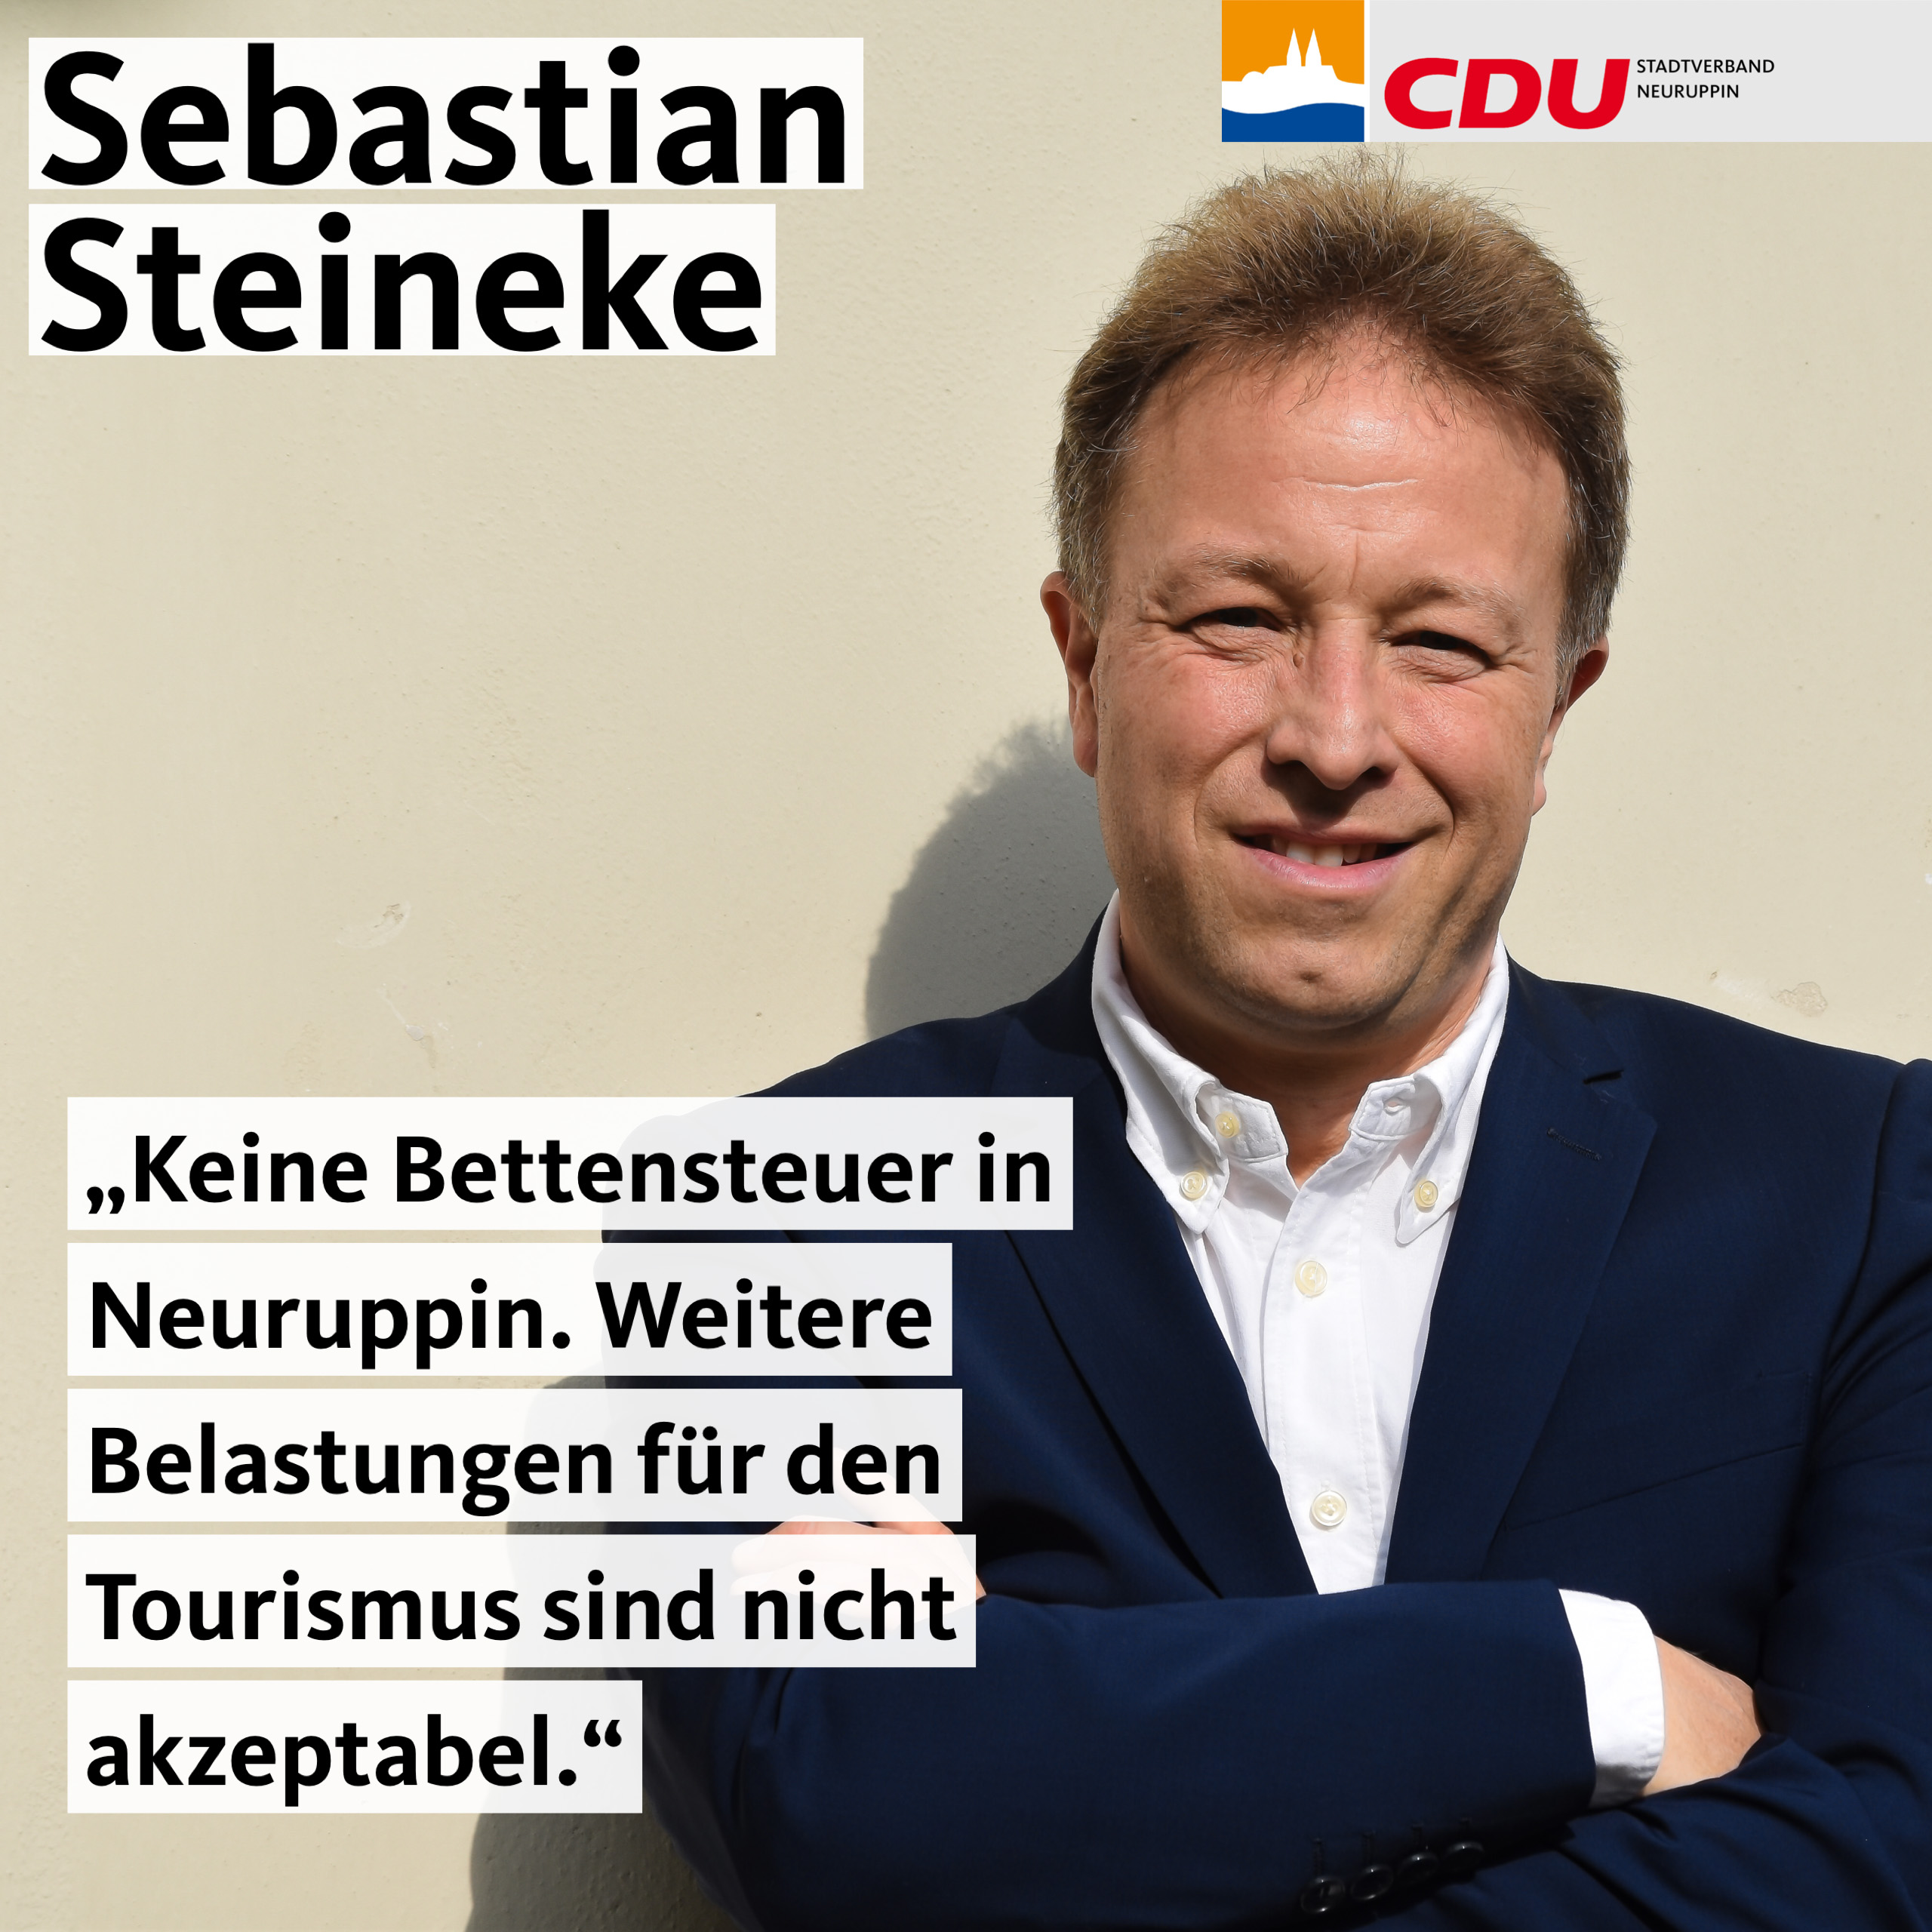 Sebastian Steineke